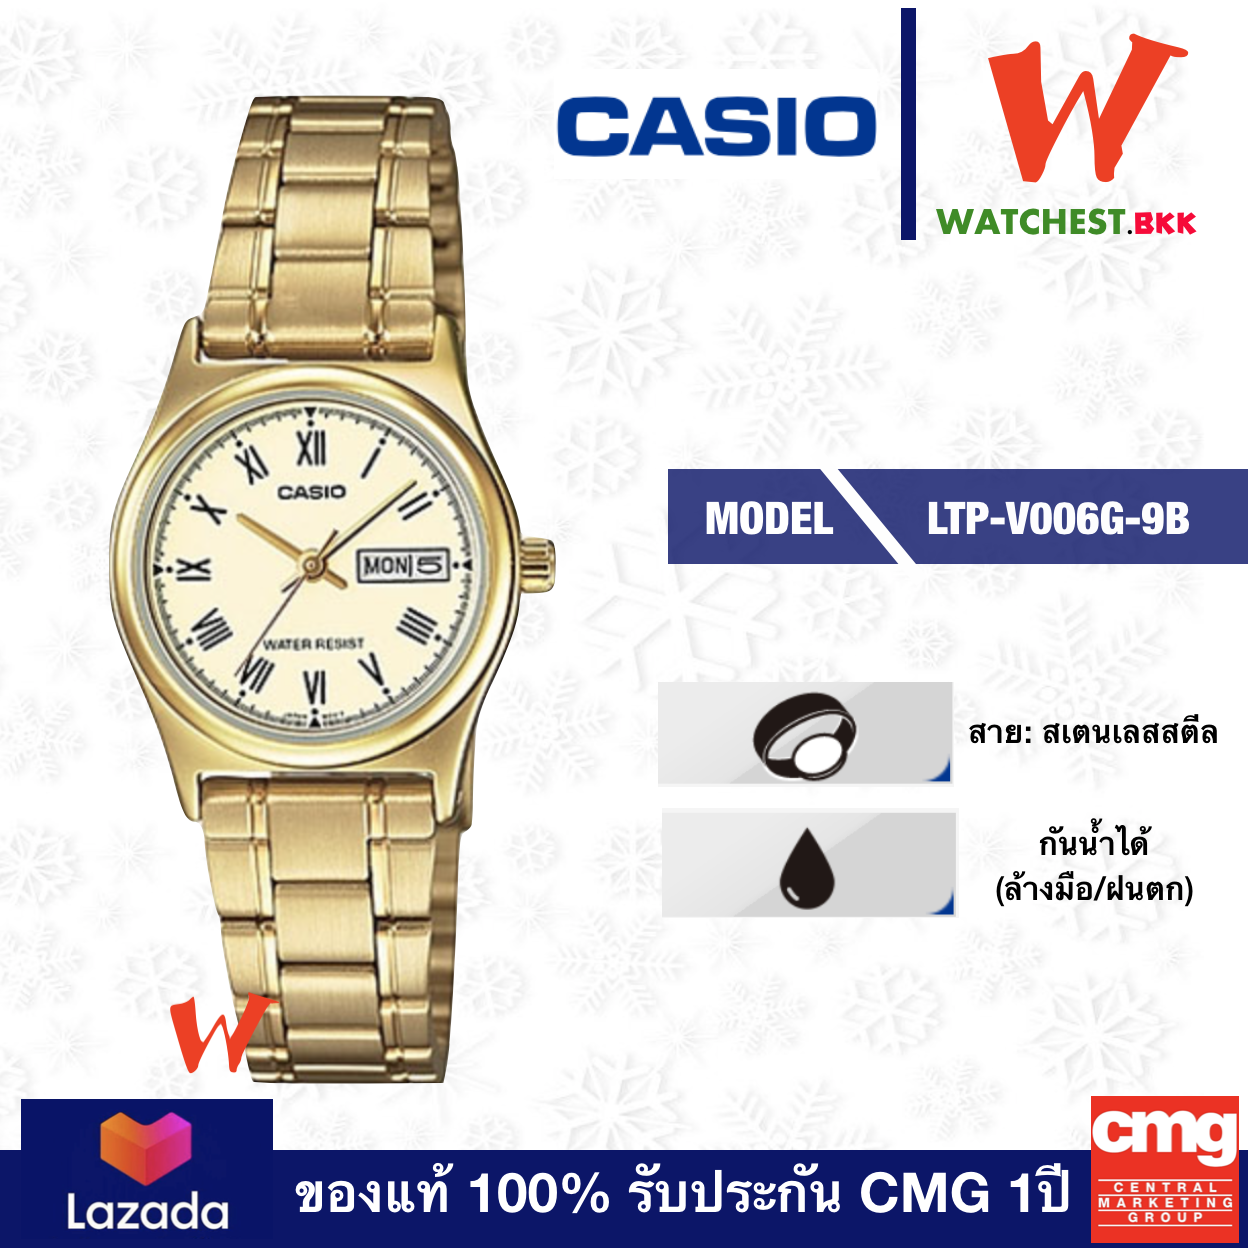 casio นาฬิกาข้อมือผู้หญิง สายสเตนเลสทอง รุ่น LTP-V006G-9B คาสิโอ้ สายเหล็ก ตัวล็อกบานพับ (watchestbkk คาสิโอ แท้ ของแท้100% ประกัน CMG)